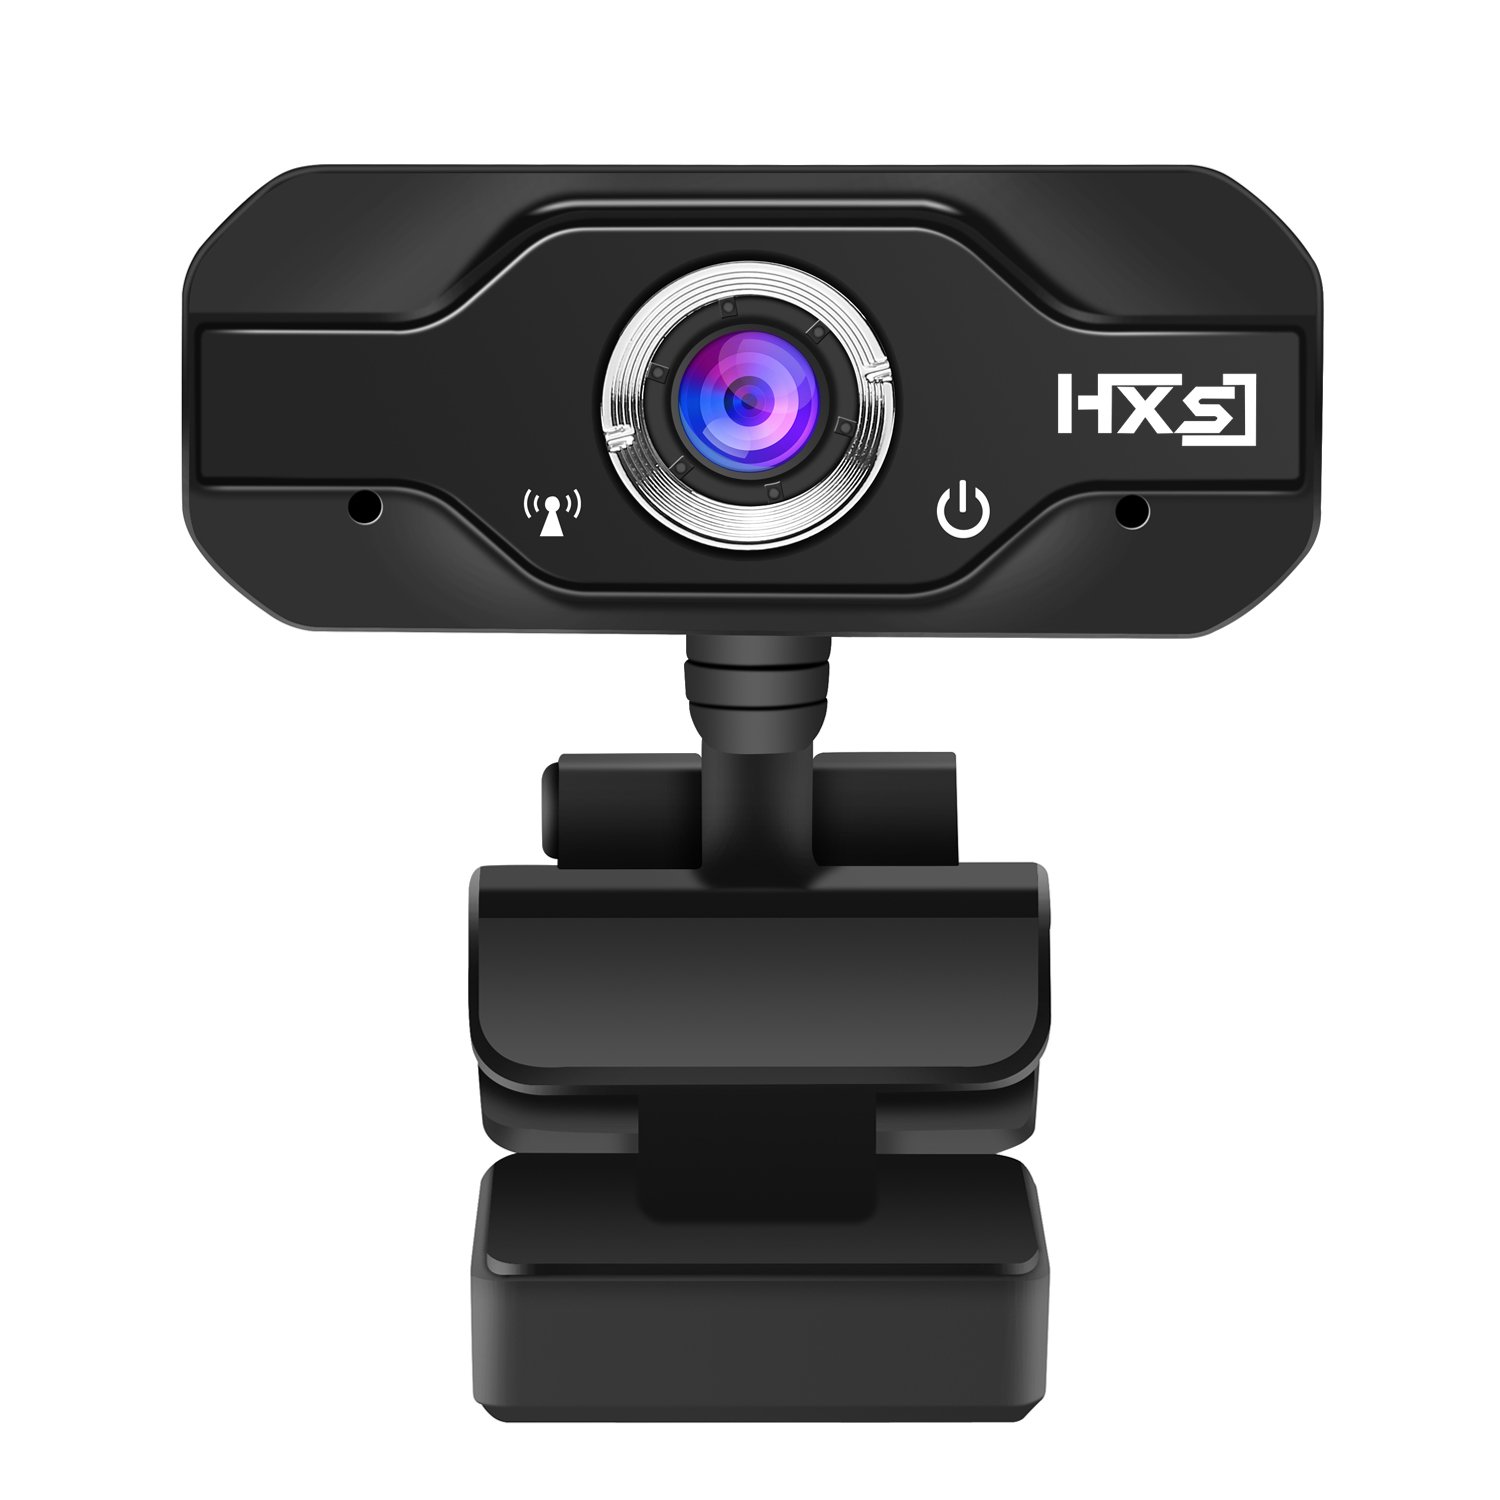 HXSJ HD 720P CMOS Sensor Webcam Built-in Microphone Adjustable Angle for Laptop Desktop 1